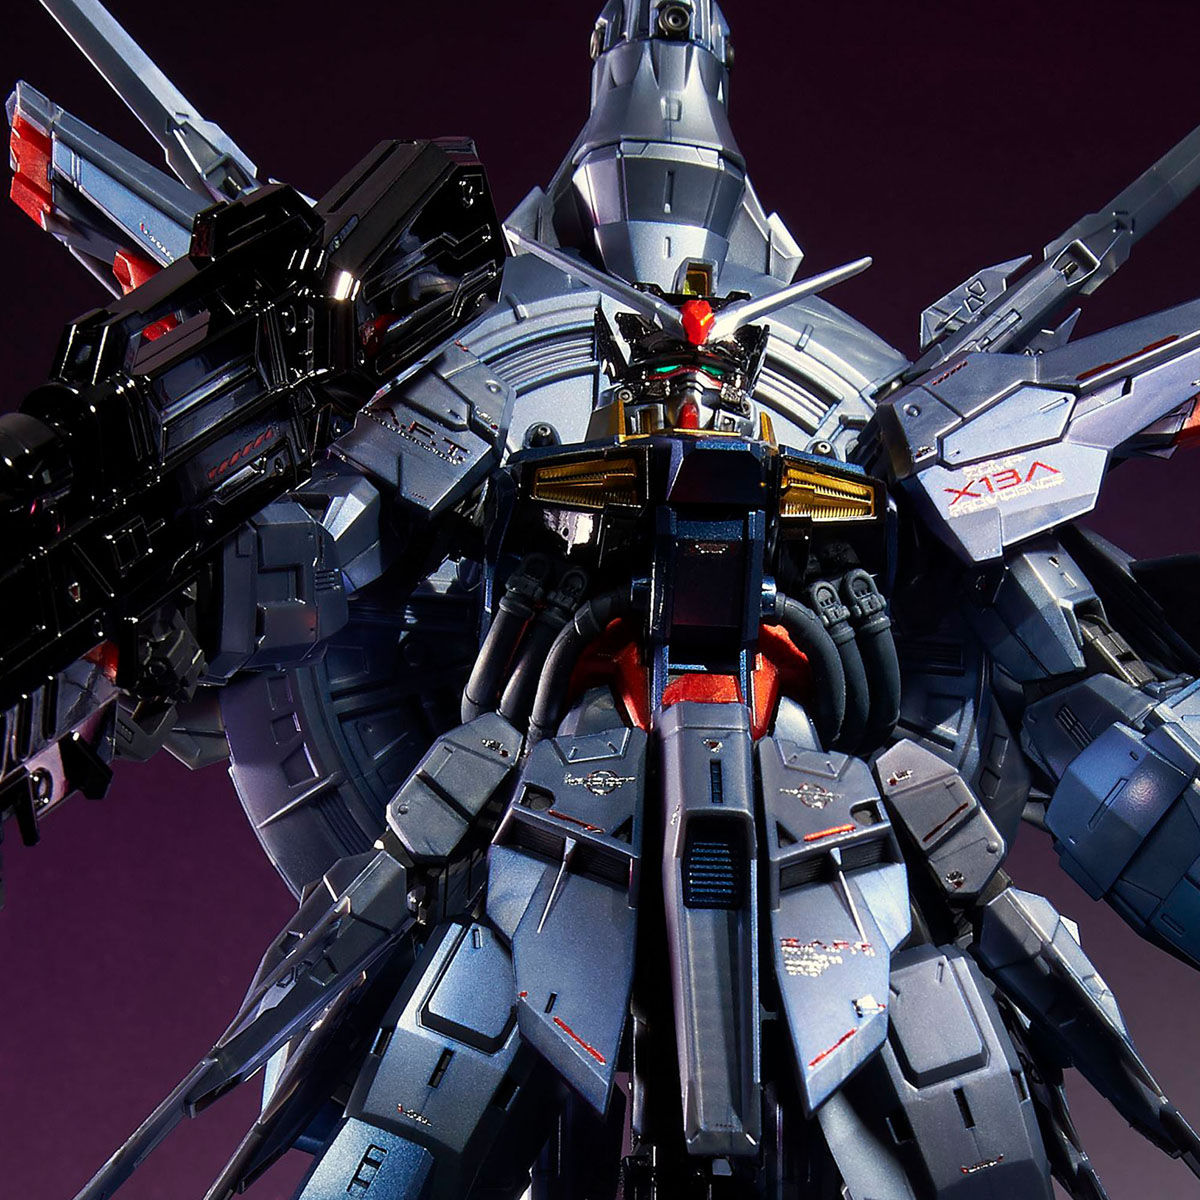 MG 1/100 ZGMF-X13A Providence Gundam(Special Coating)